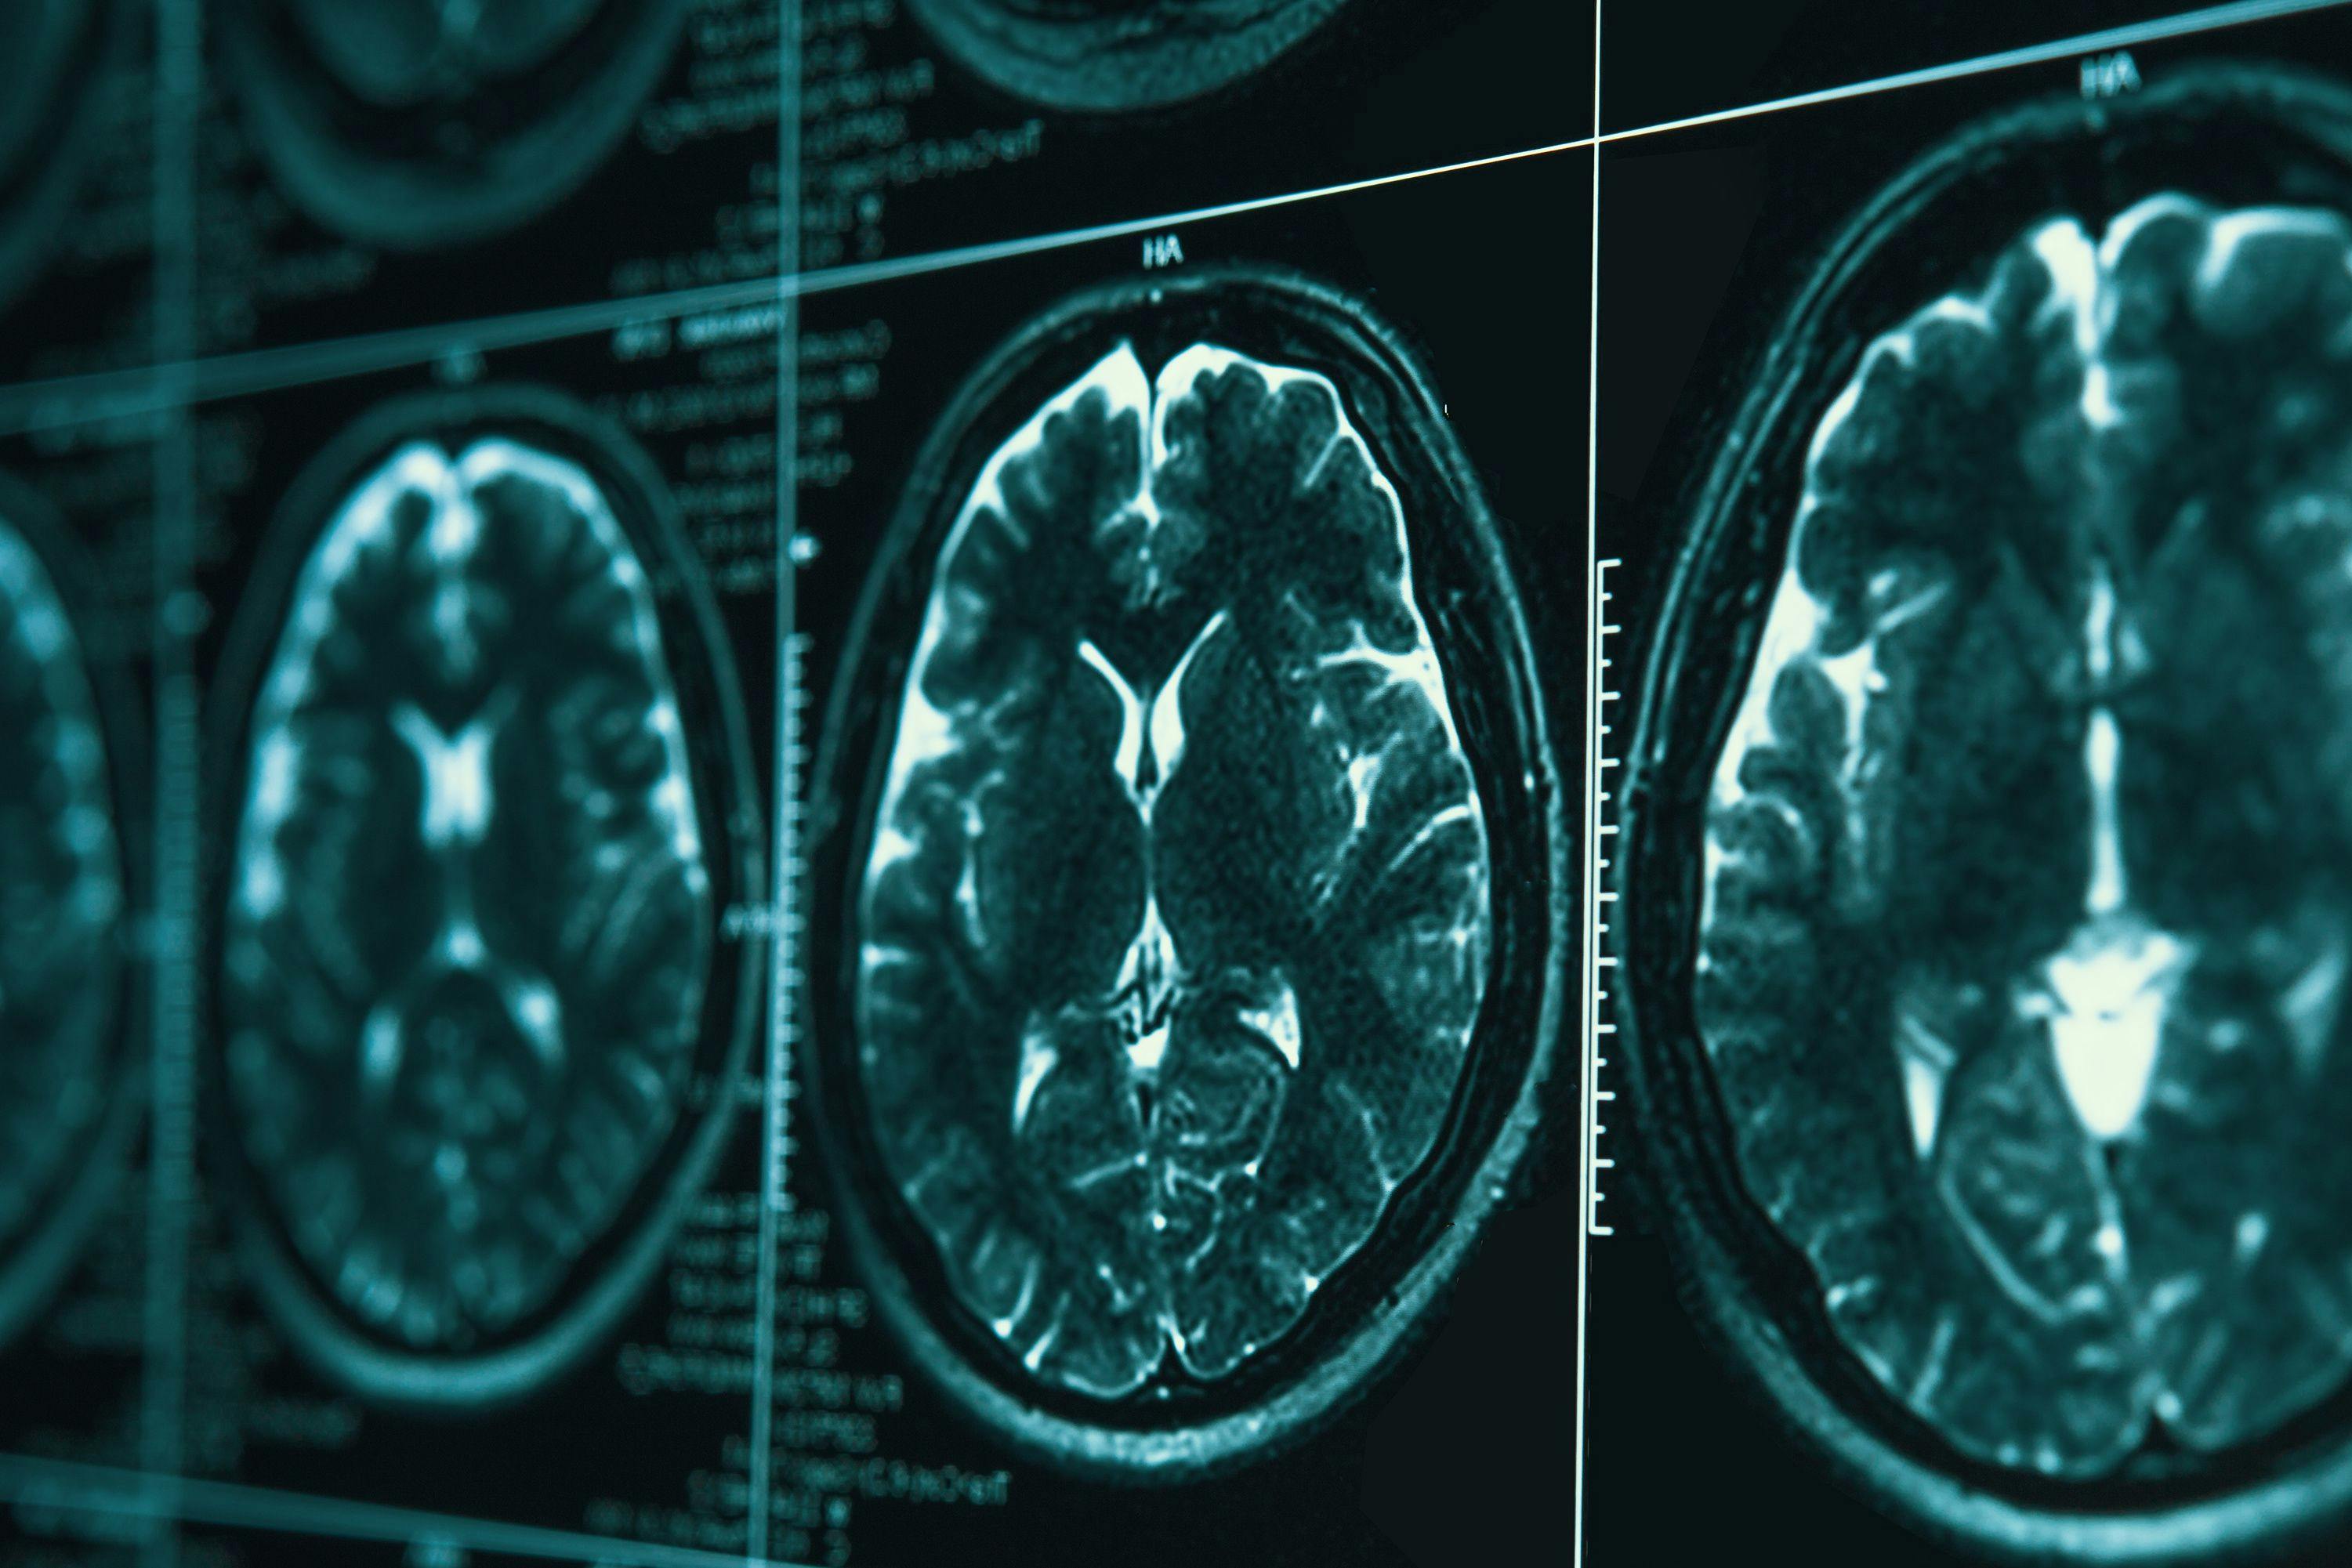 MRI or magnetic resonance image of head and brain scan | Image Credit: DedMityay - stock.adobe.com